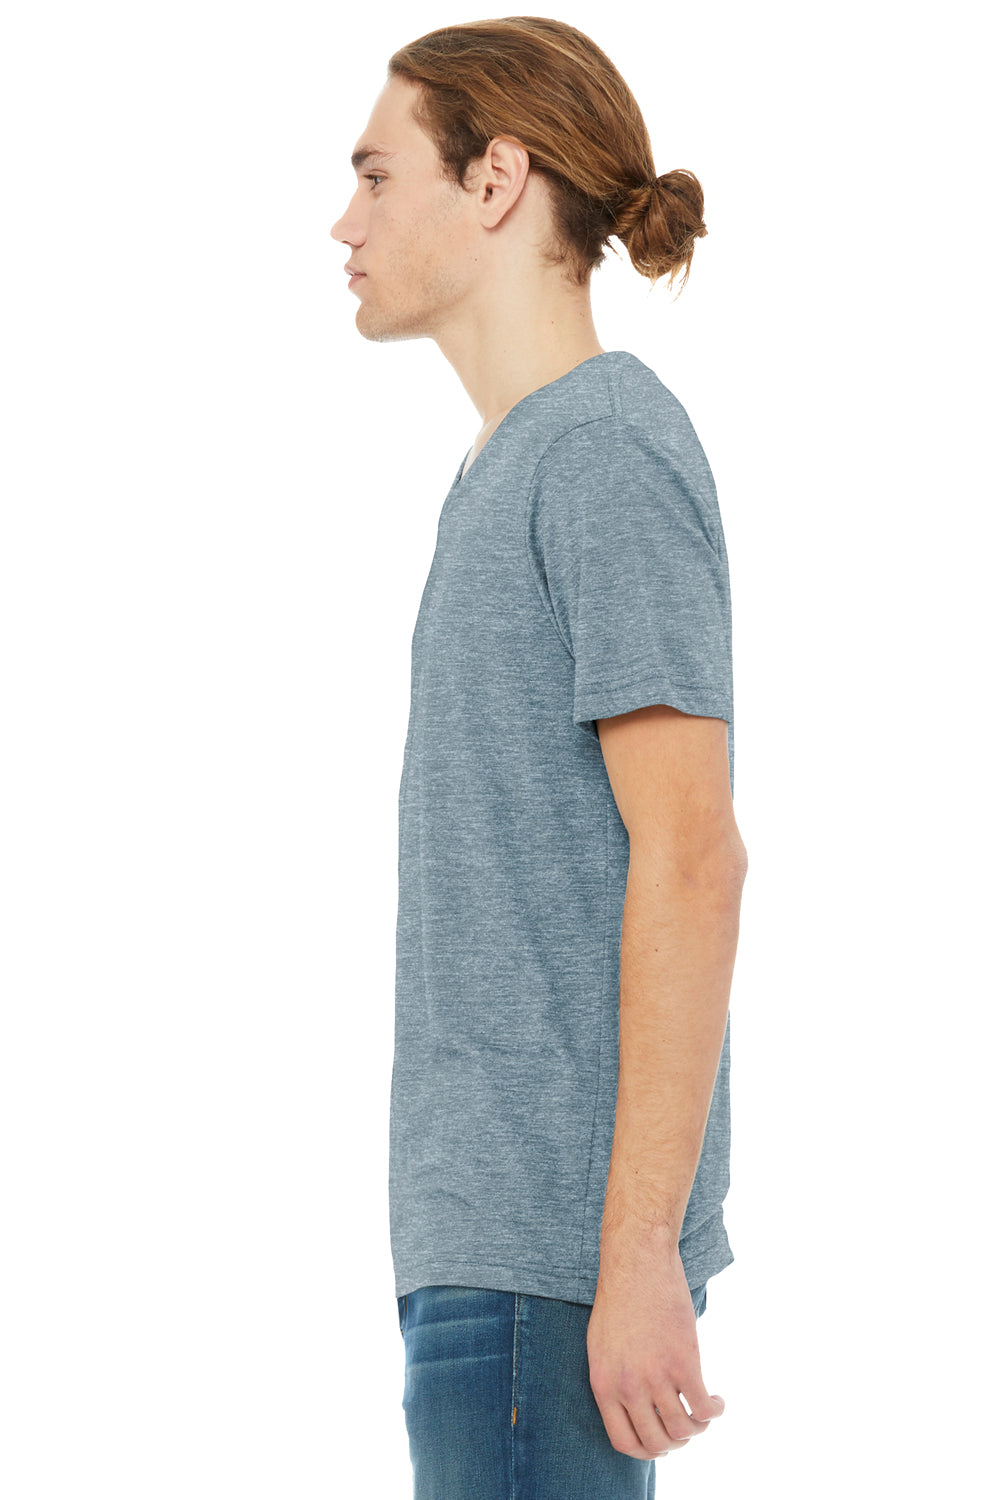 Bella + Canvas BC3005CVC Mens CVC Short Sleeve V-Neck T-Shirt Heather Slate Blue Model Side